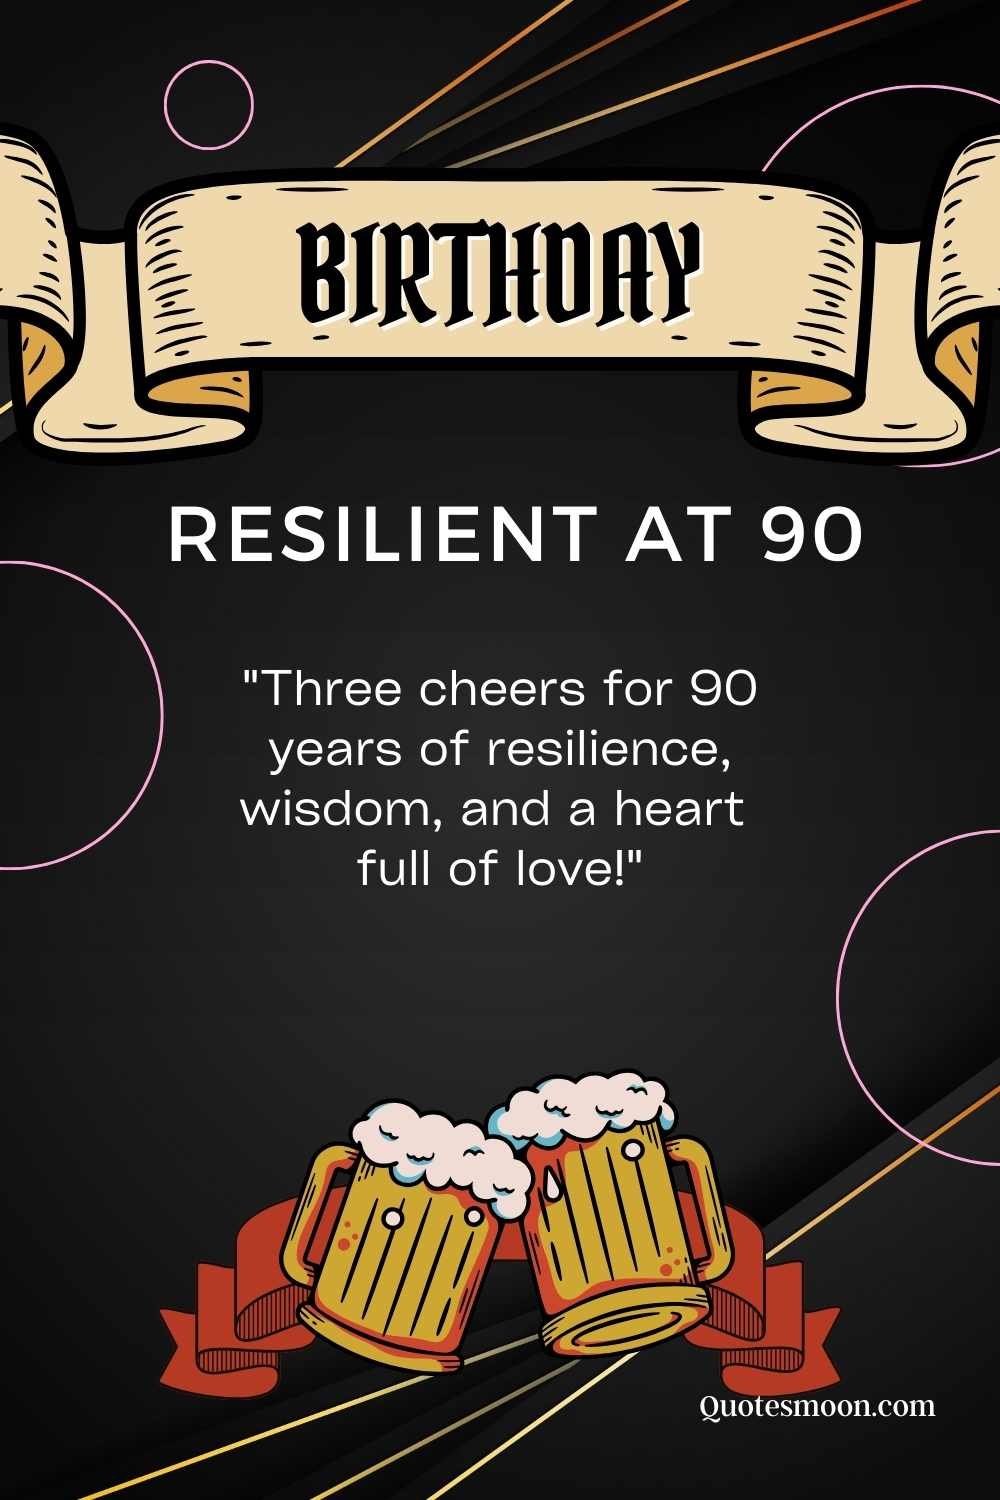 90th birthday quotes